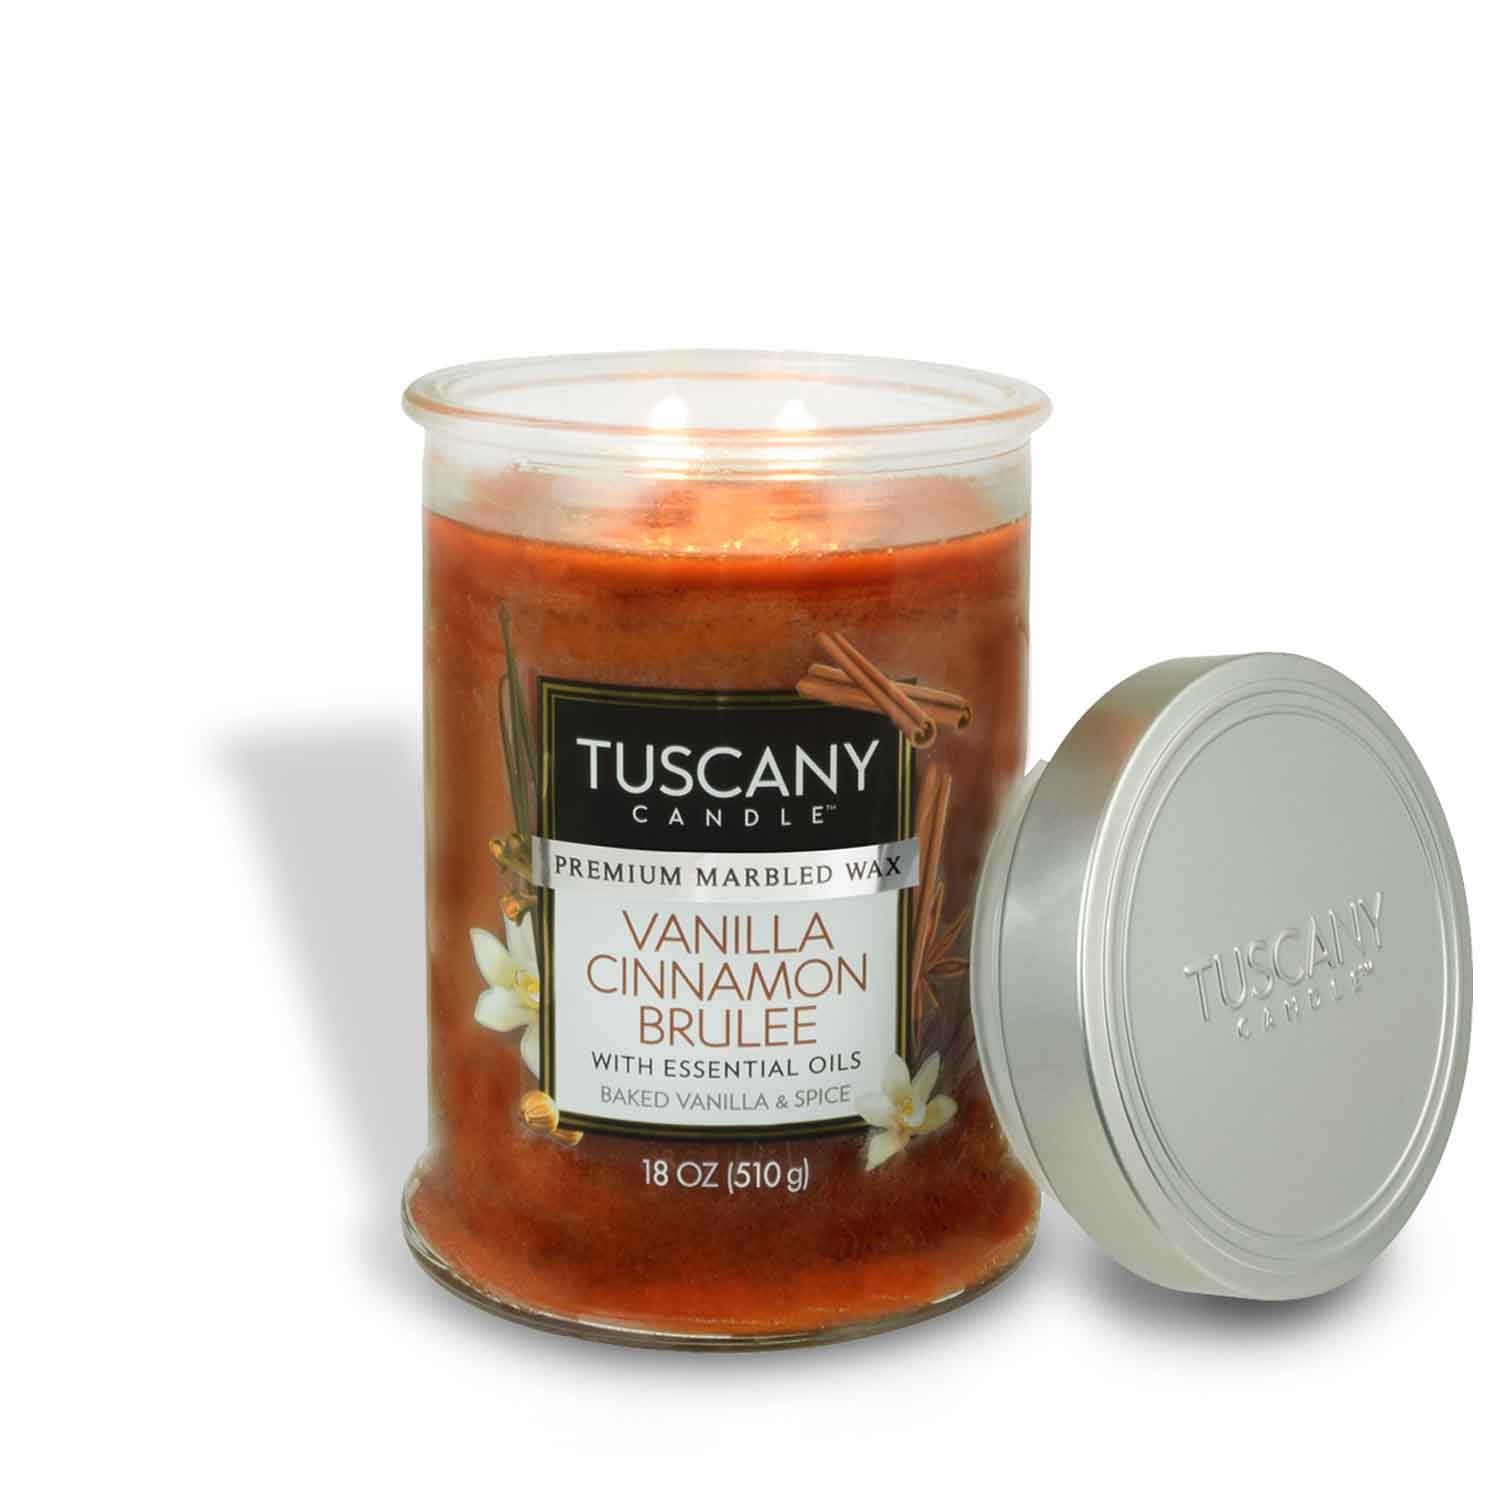 Tuscany Candle Marbled Wax, Premium, Sea & Sand - 1 candle, 18 oz